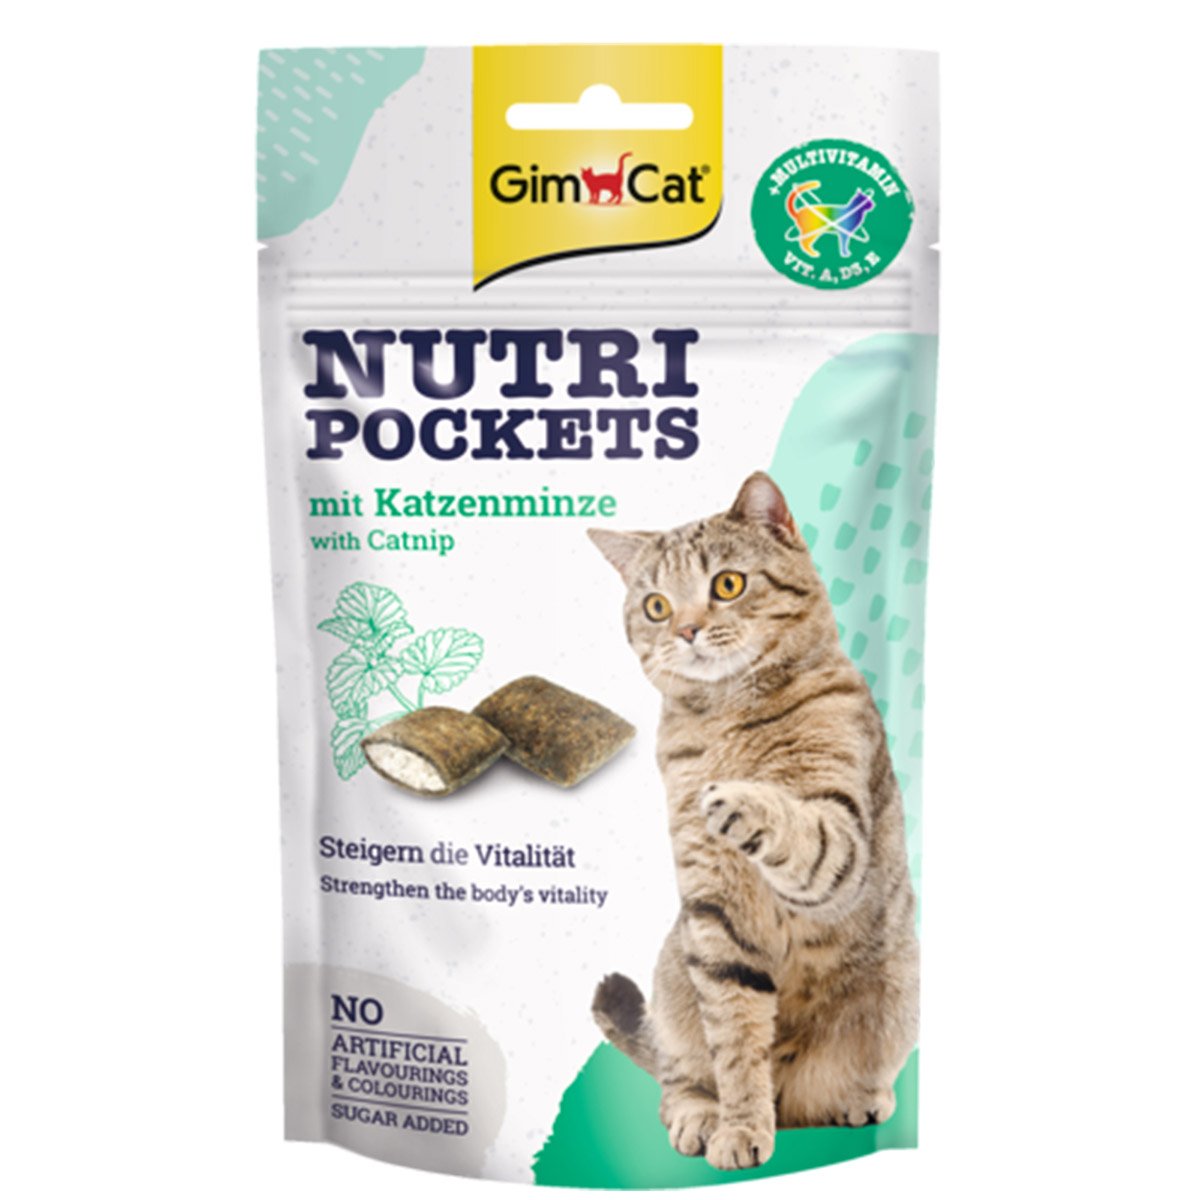 GimCat Nutri Pockets Katzenminze 12x60g